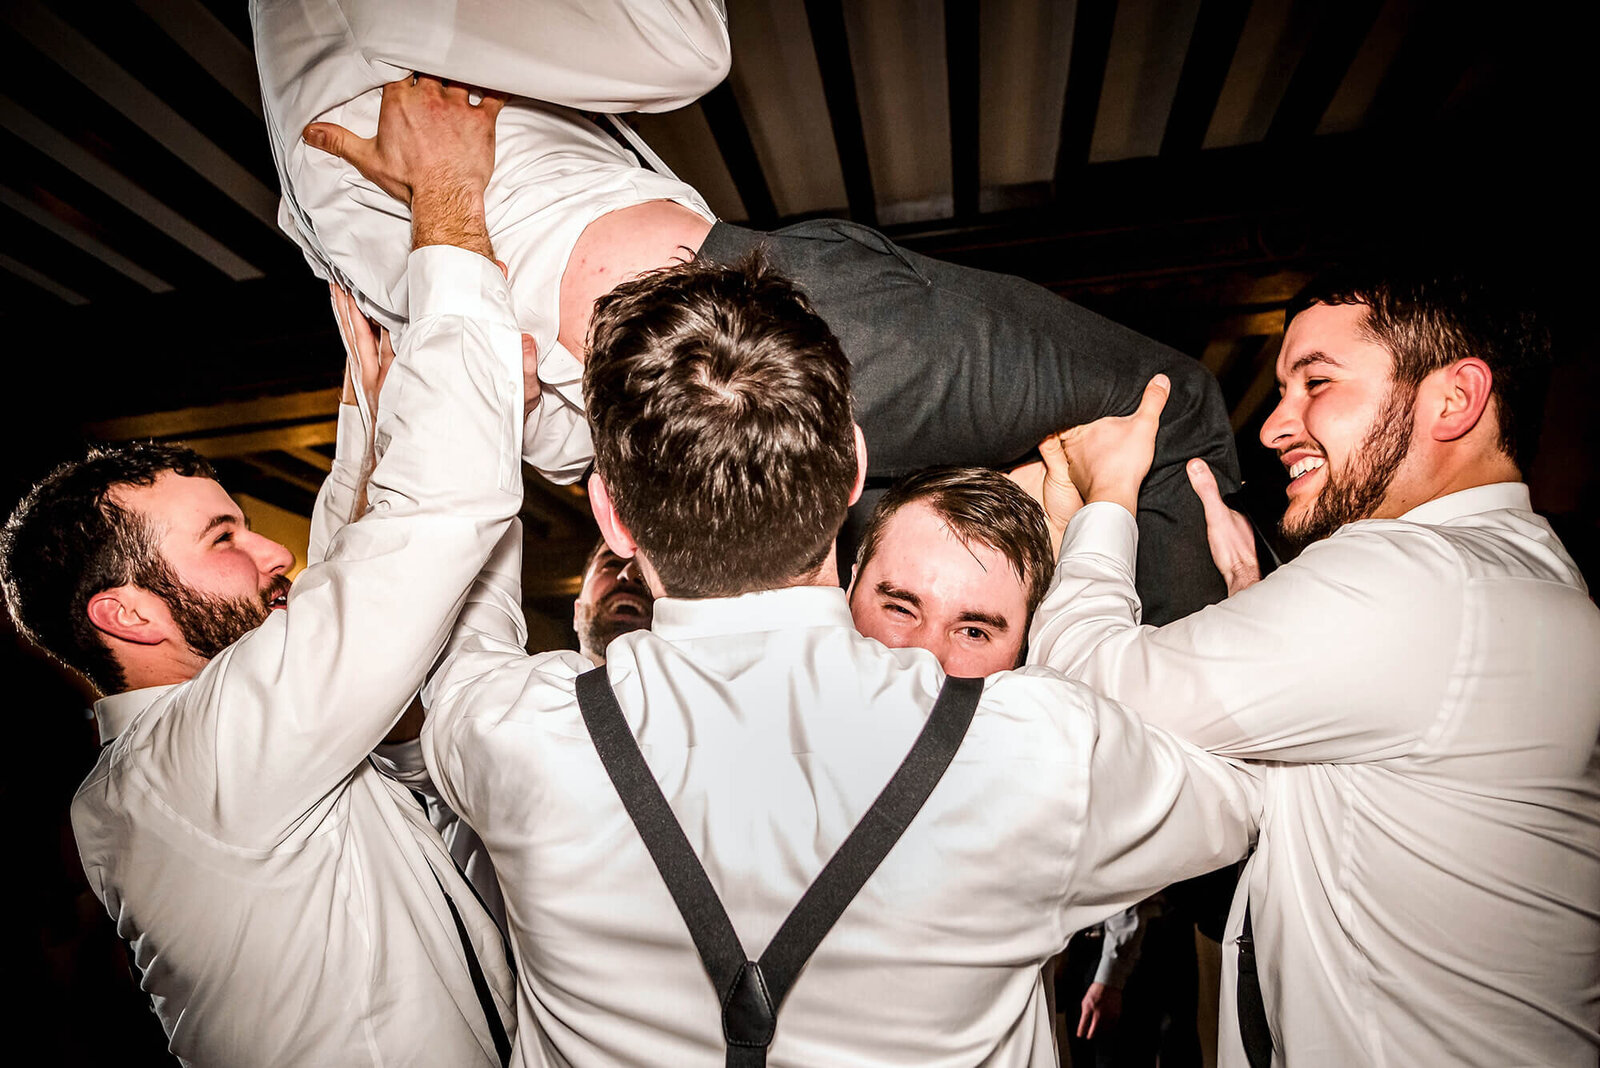 Groomsmen lifting groom at wedding reception